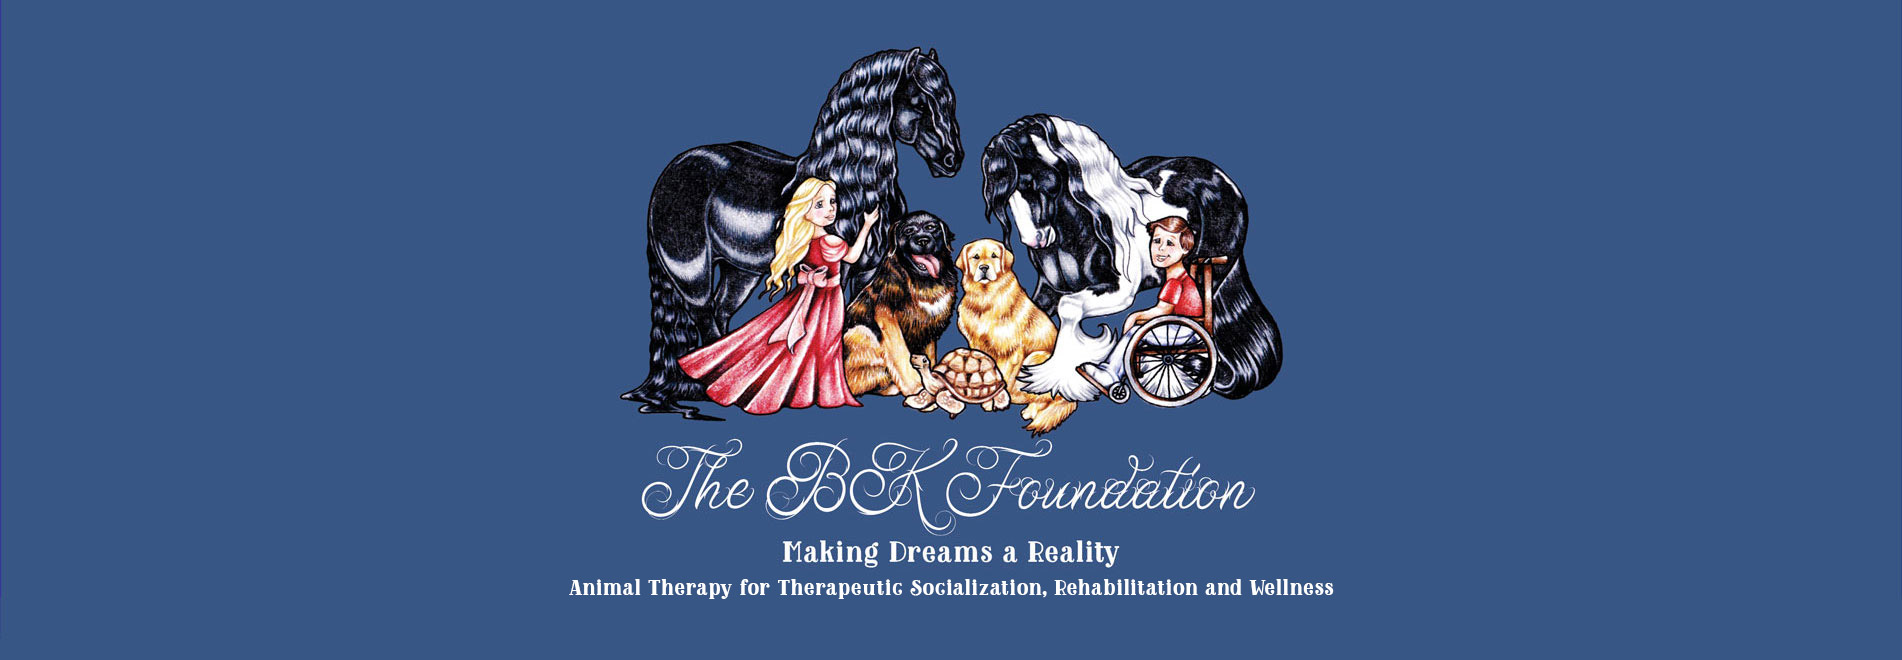 BK Foundation Banner